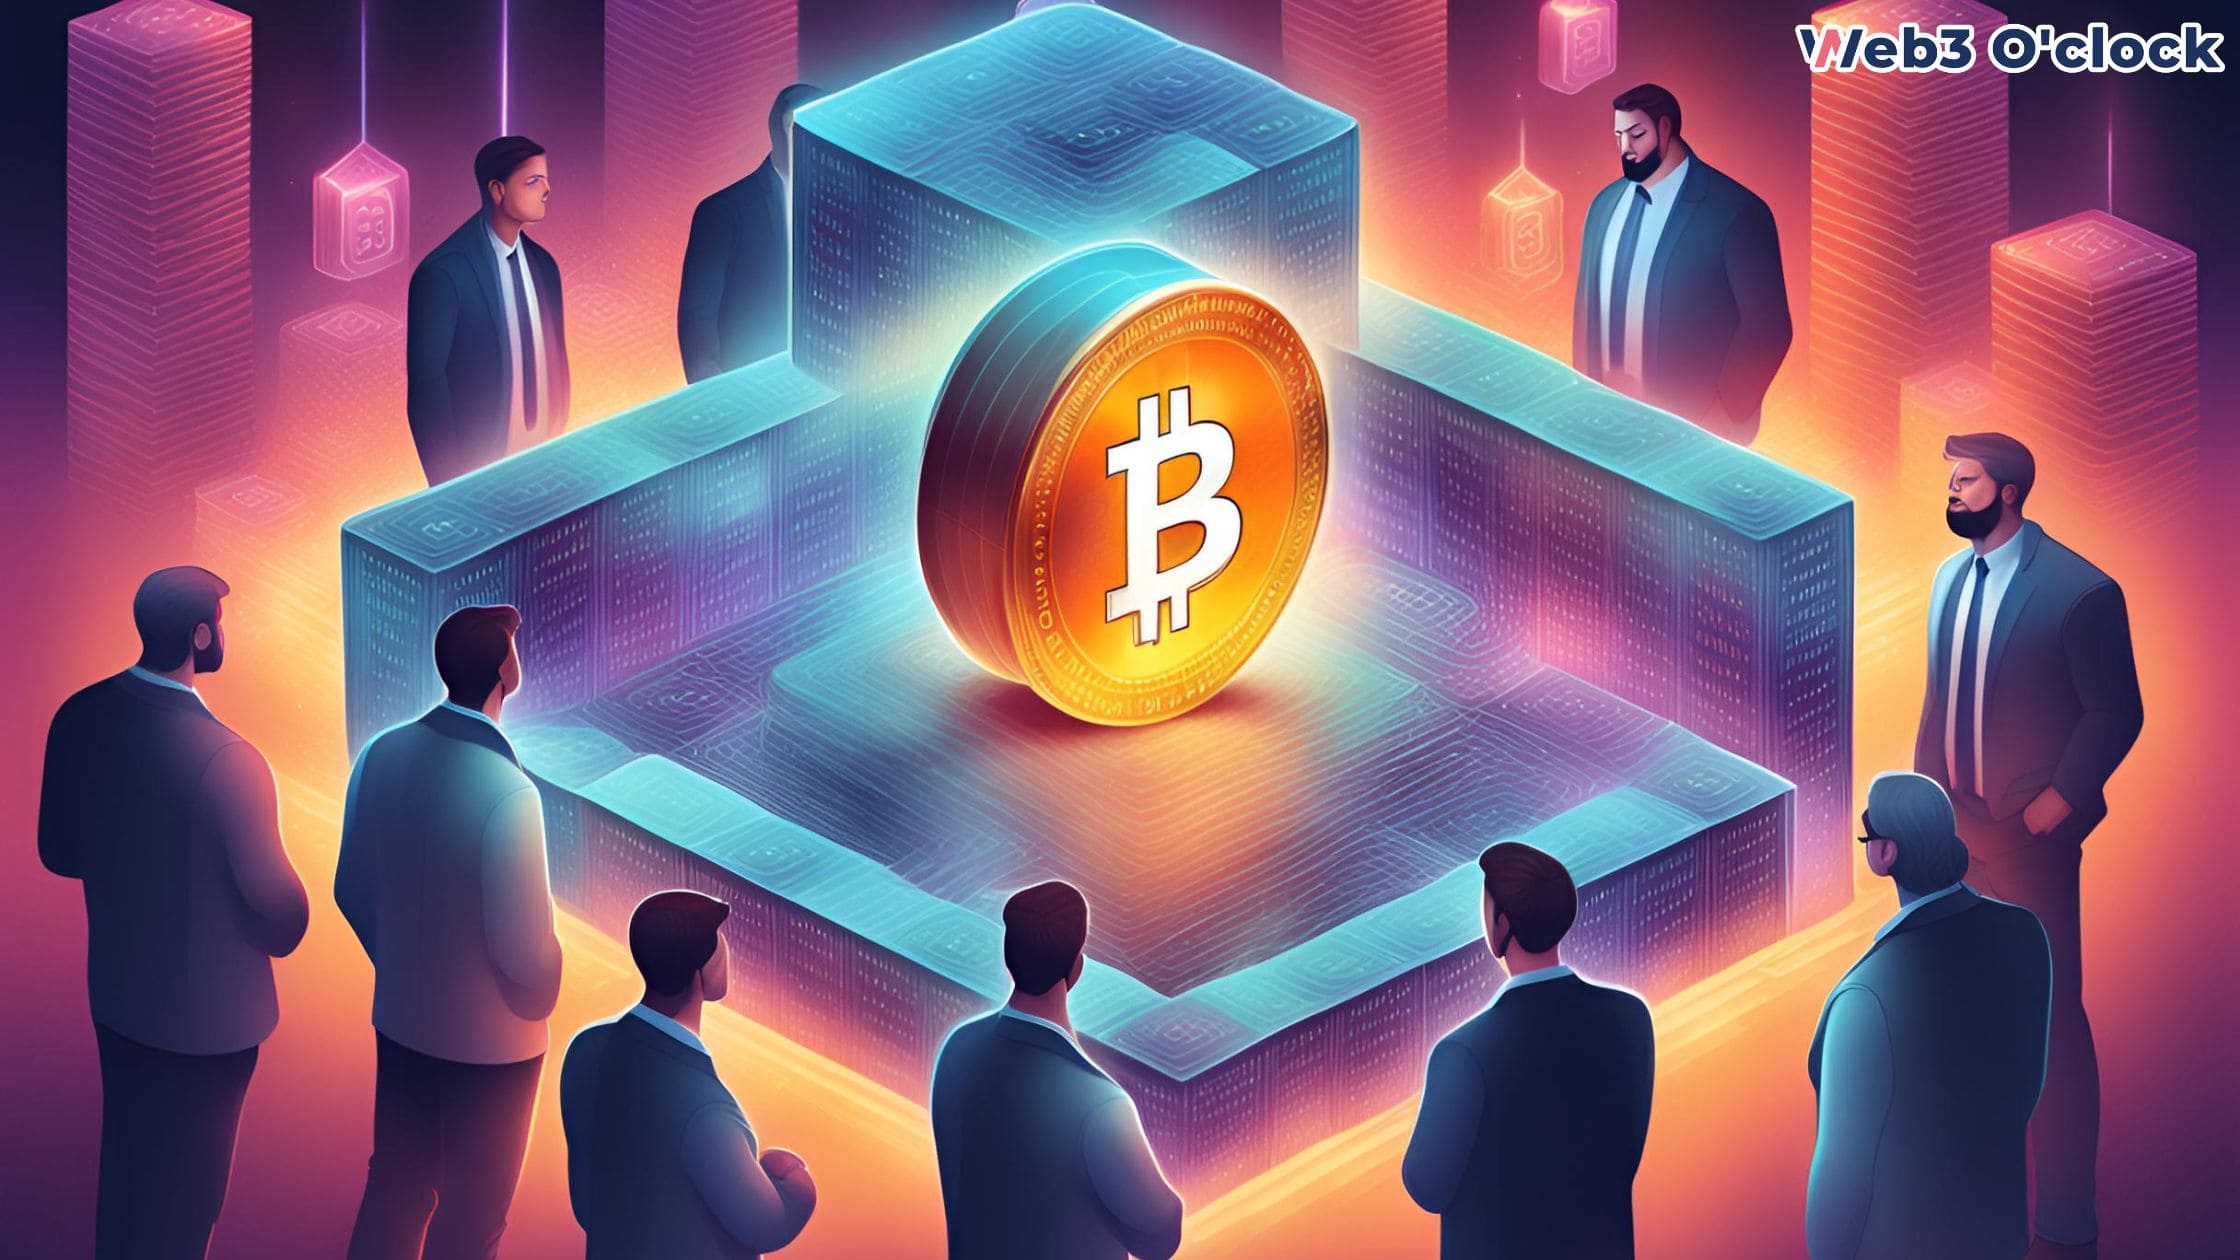 Crypto Investors Understand Blockchain by web3 o'clock